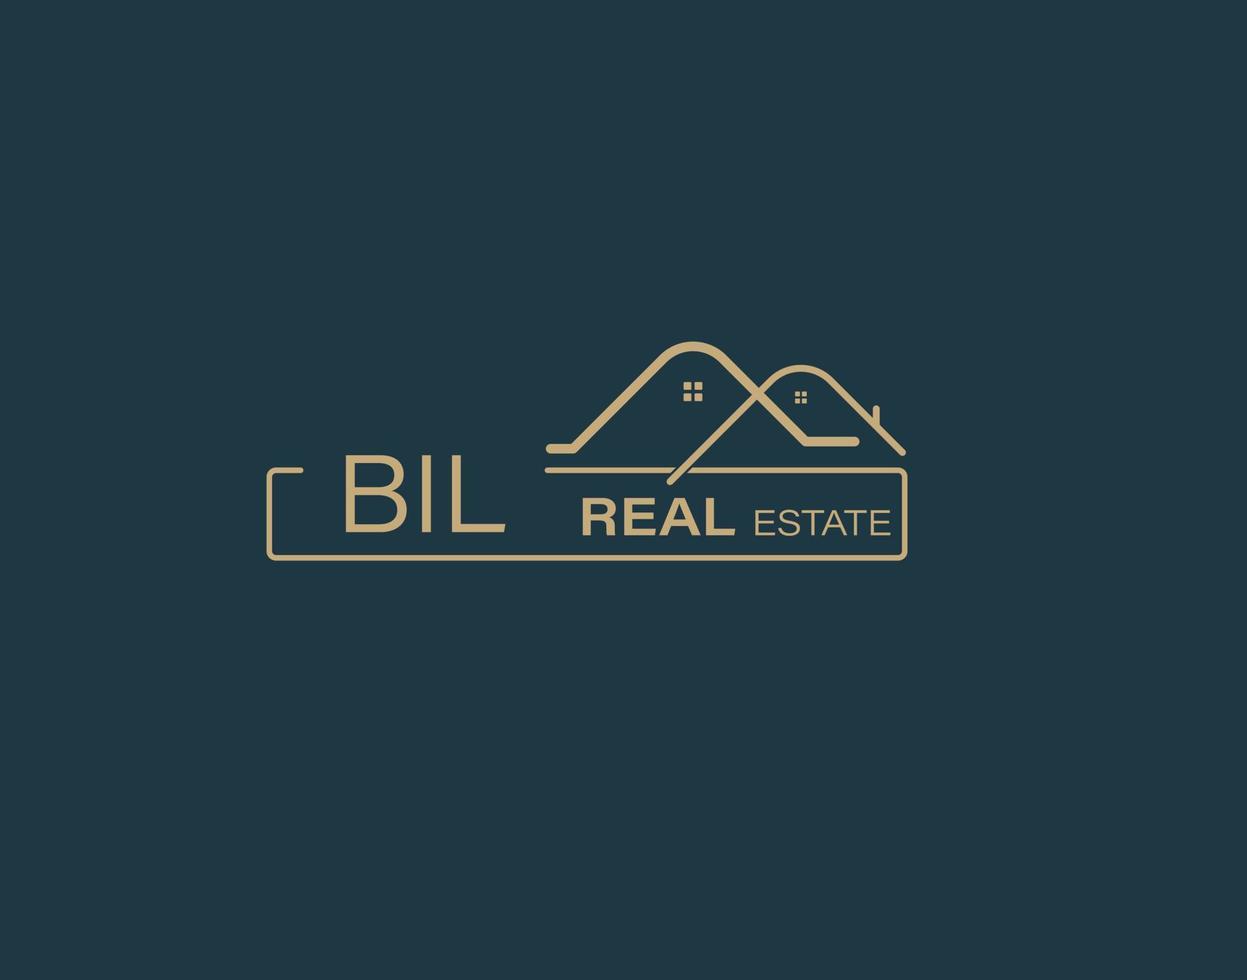 BIL Real Estate and Consultants Logo Design Vectors images. Luxury Real Estate Logo Design